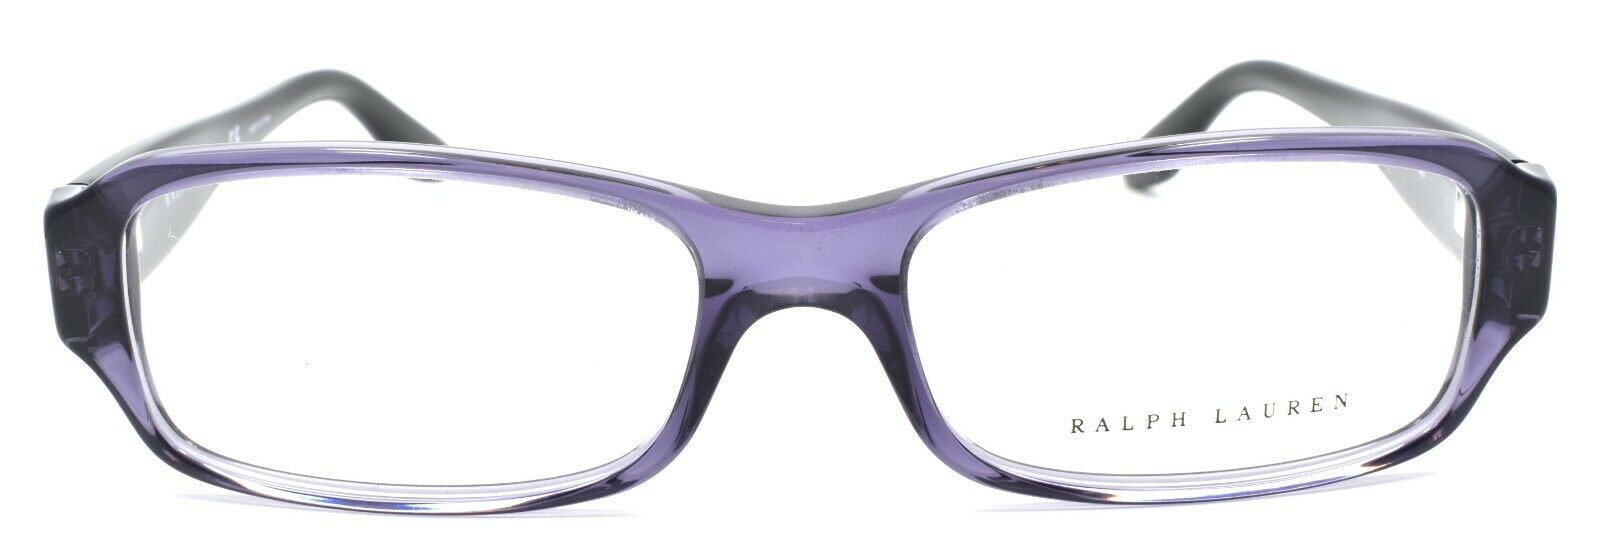 2-Ralph Lauren RL6121B 5513 Women's Eyeglasses Frames 52-16-140 Transparent Violet-8053672313185-IKSpecs